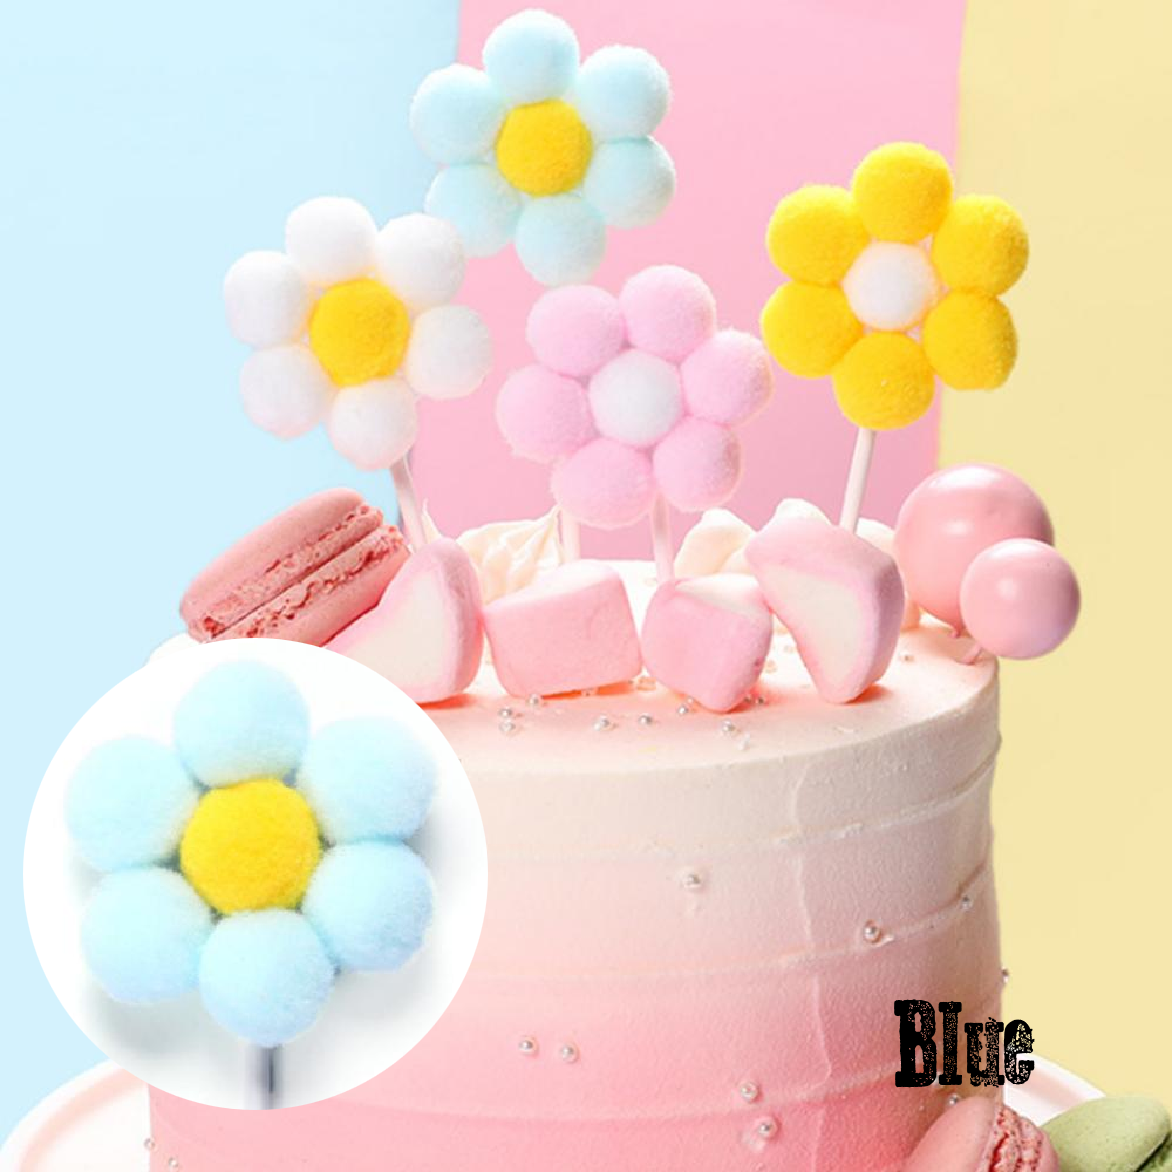 Cake Topper, Cake Decorations - Cotton Fluffy Daisy - Blue